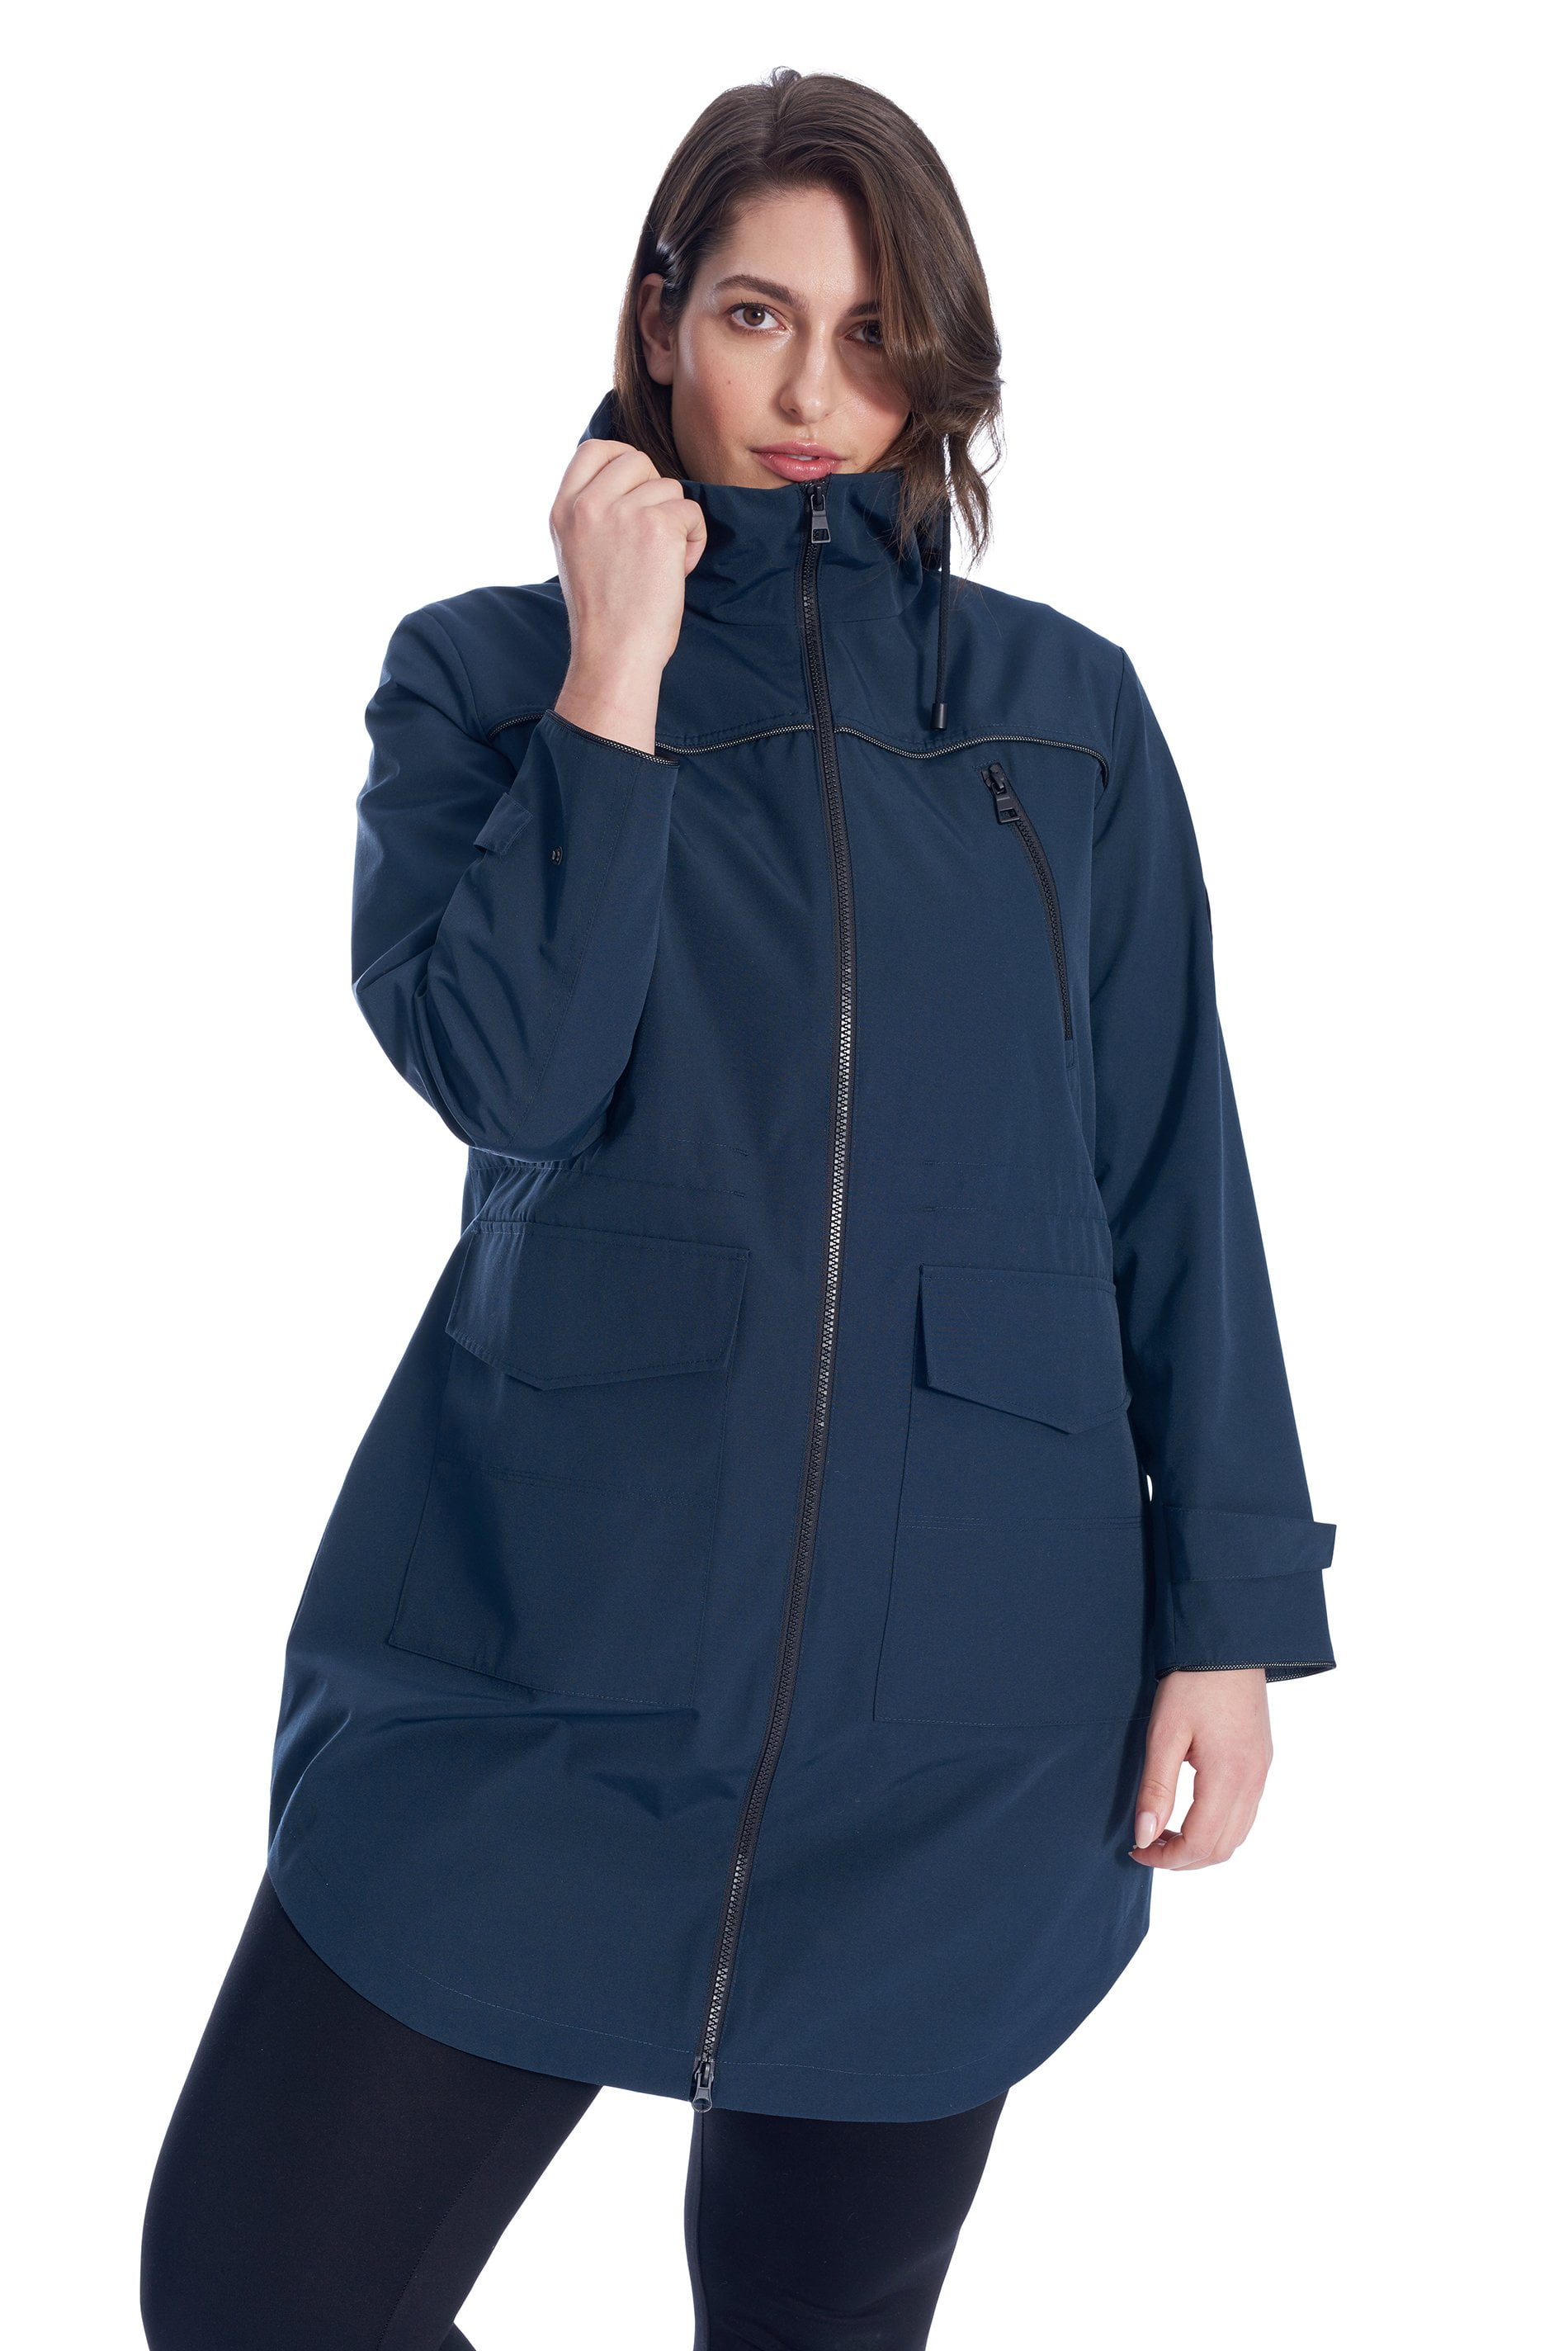 Alpine North Women's Plus Size Rain Jacket | Weather Resistant Raincoat